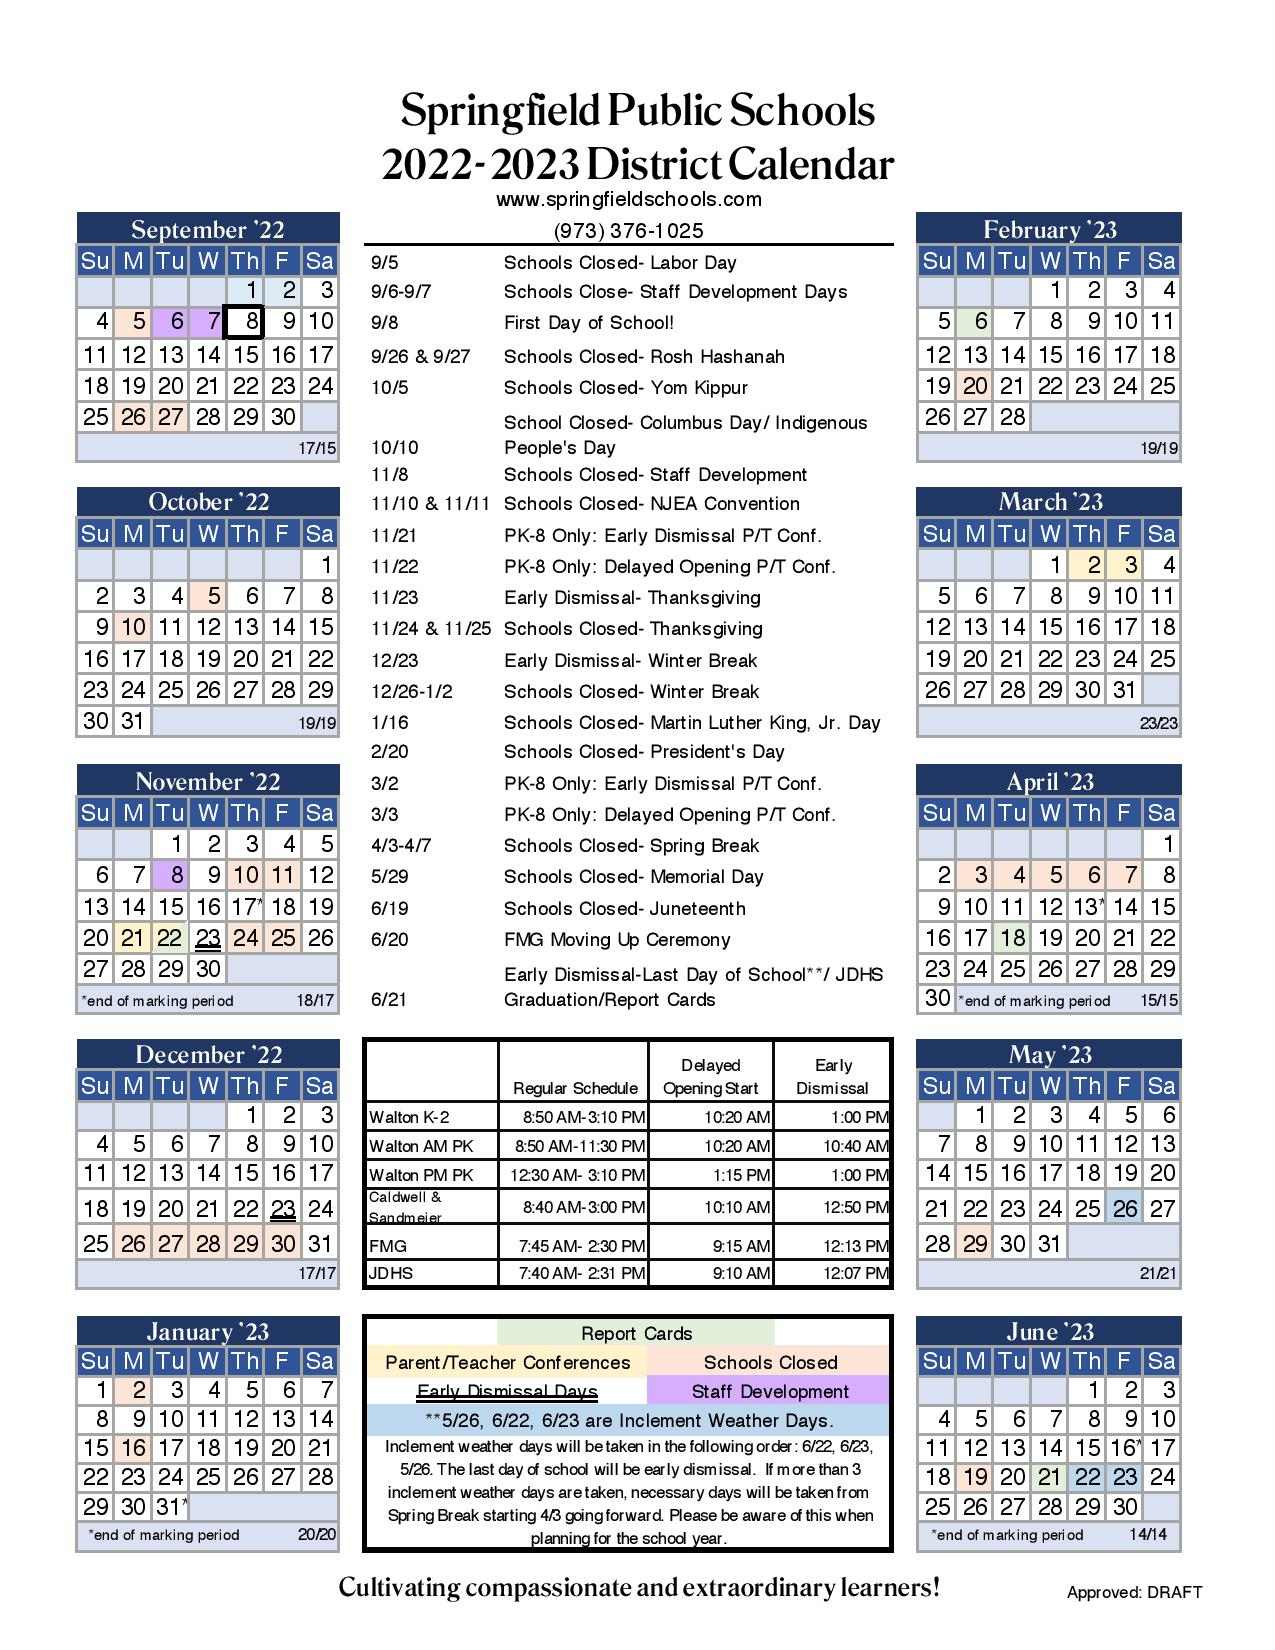 Springfield Public Schools Calendar Holidays 2022 2023